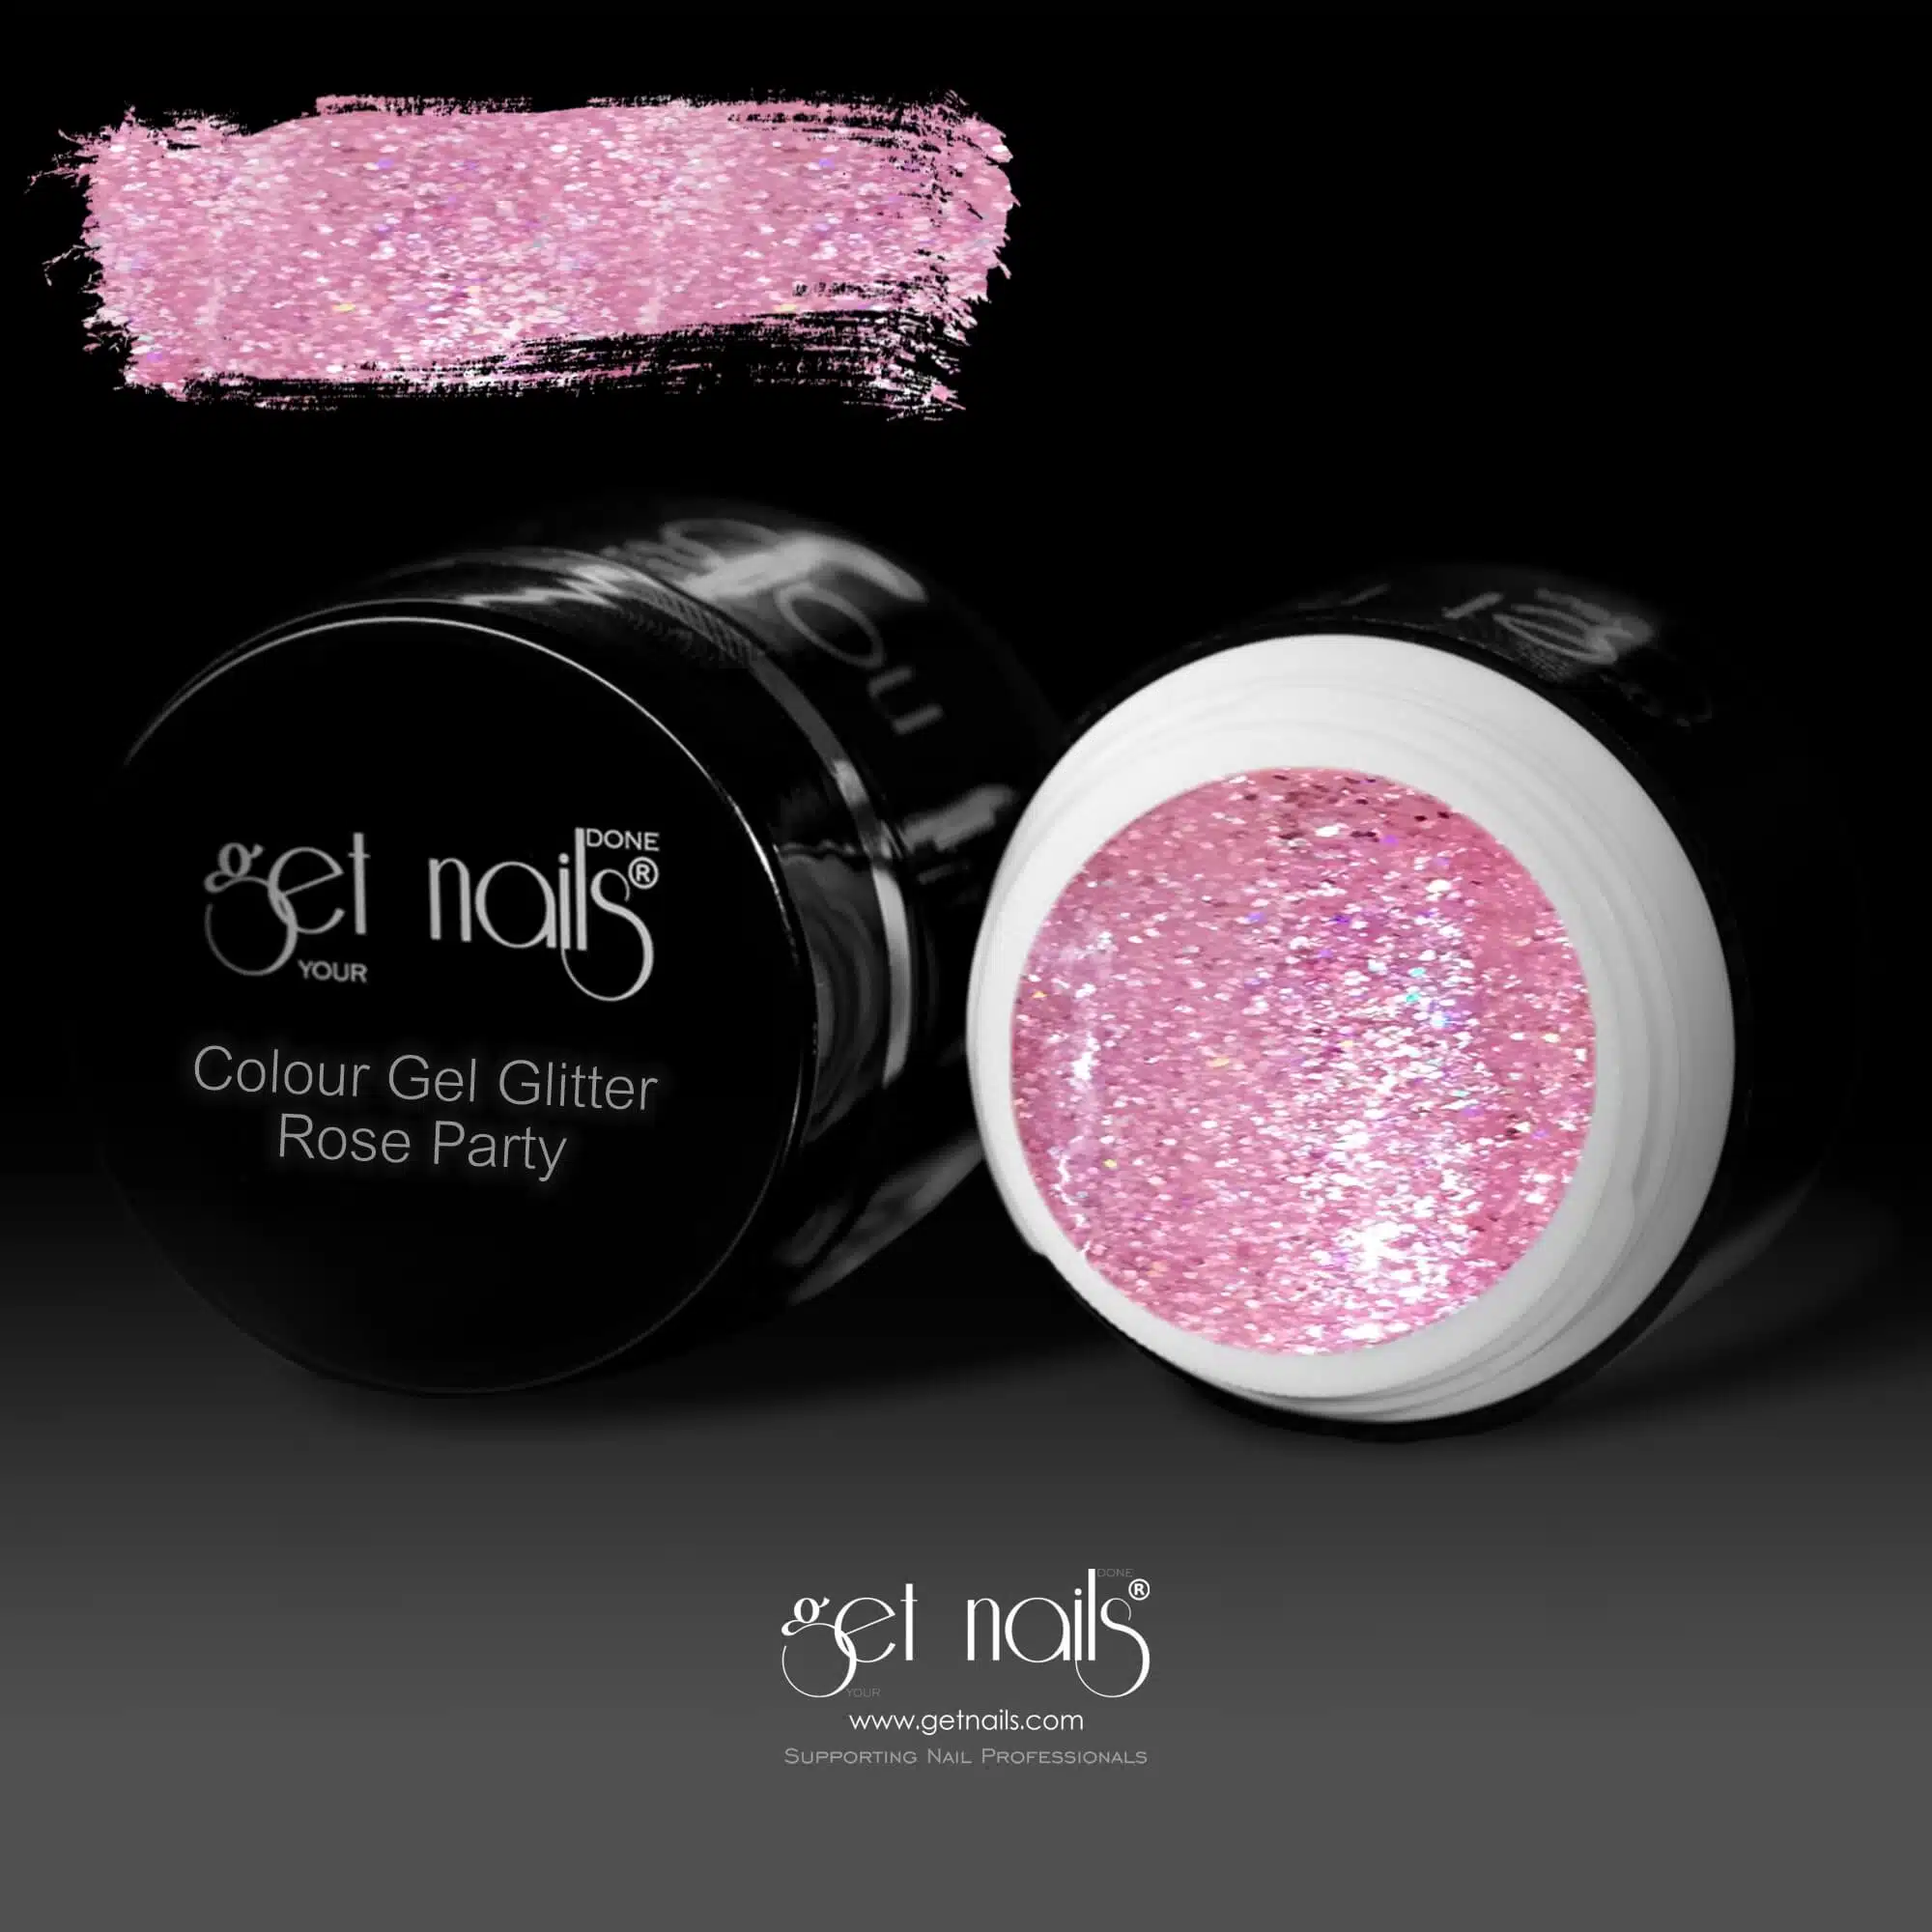 Get Nails Austria - Gel colorato Glitter Rose Party 5g